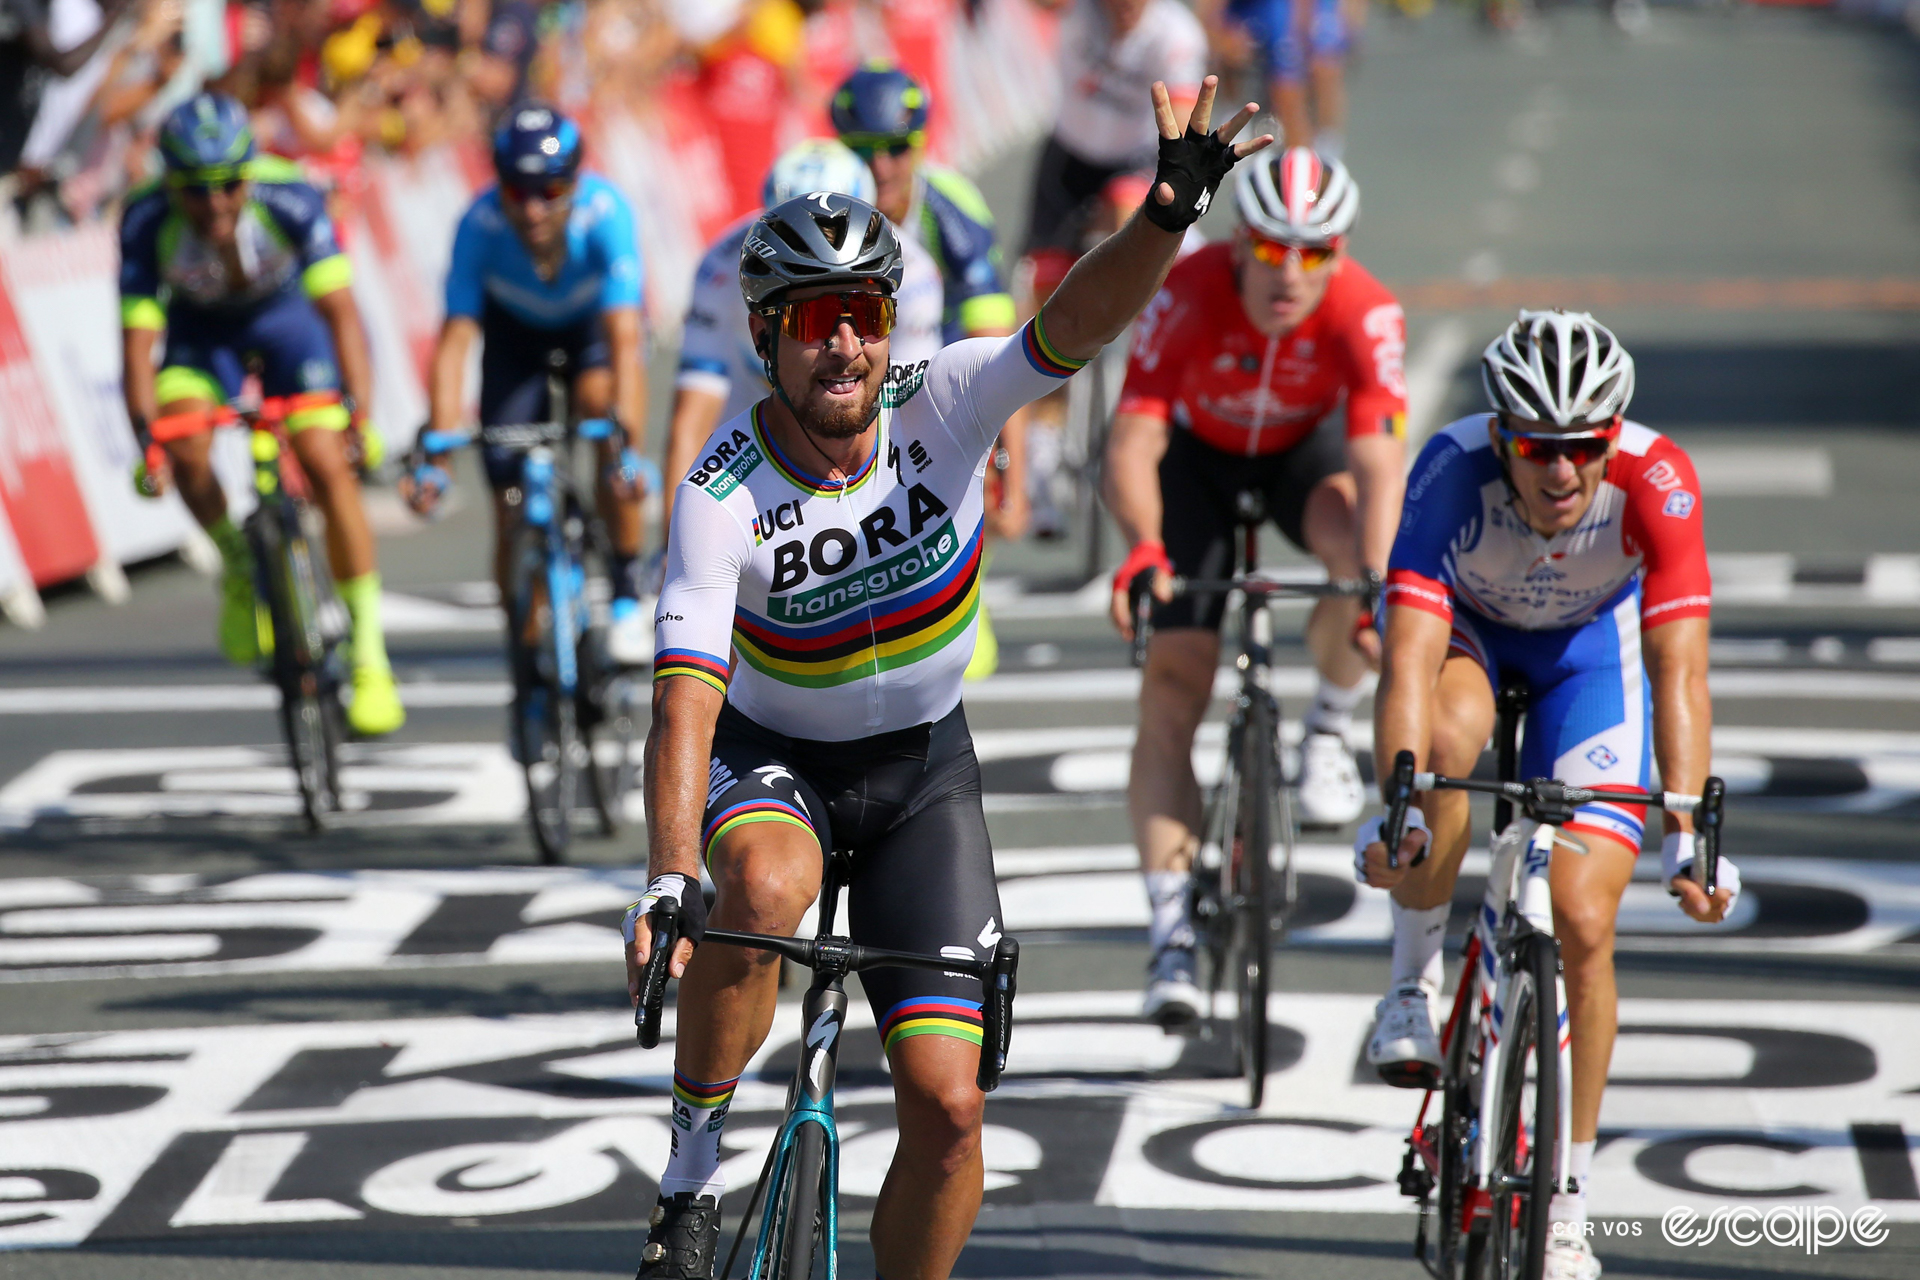 Peter Sagan celebrates winning a stage at the 2018 Tour de France.